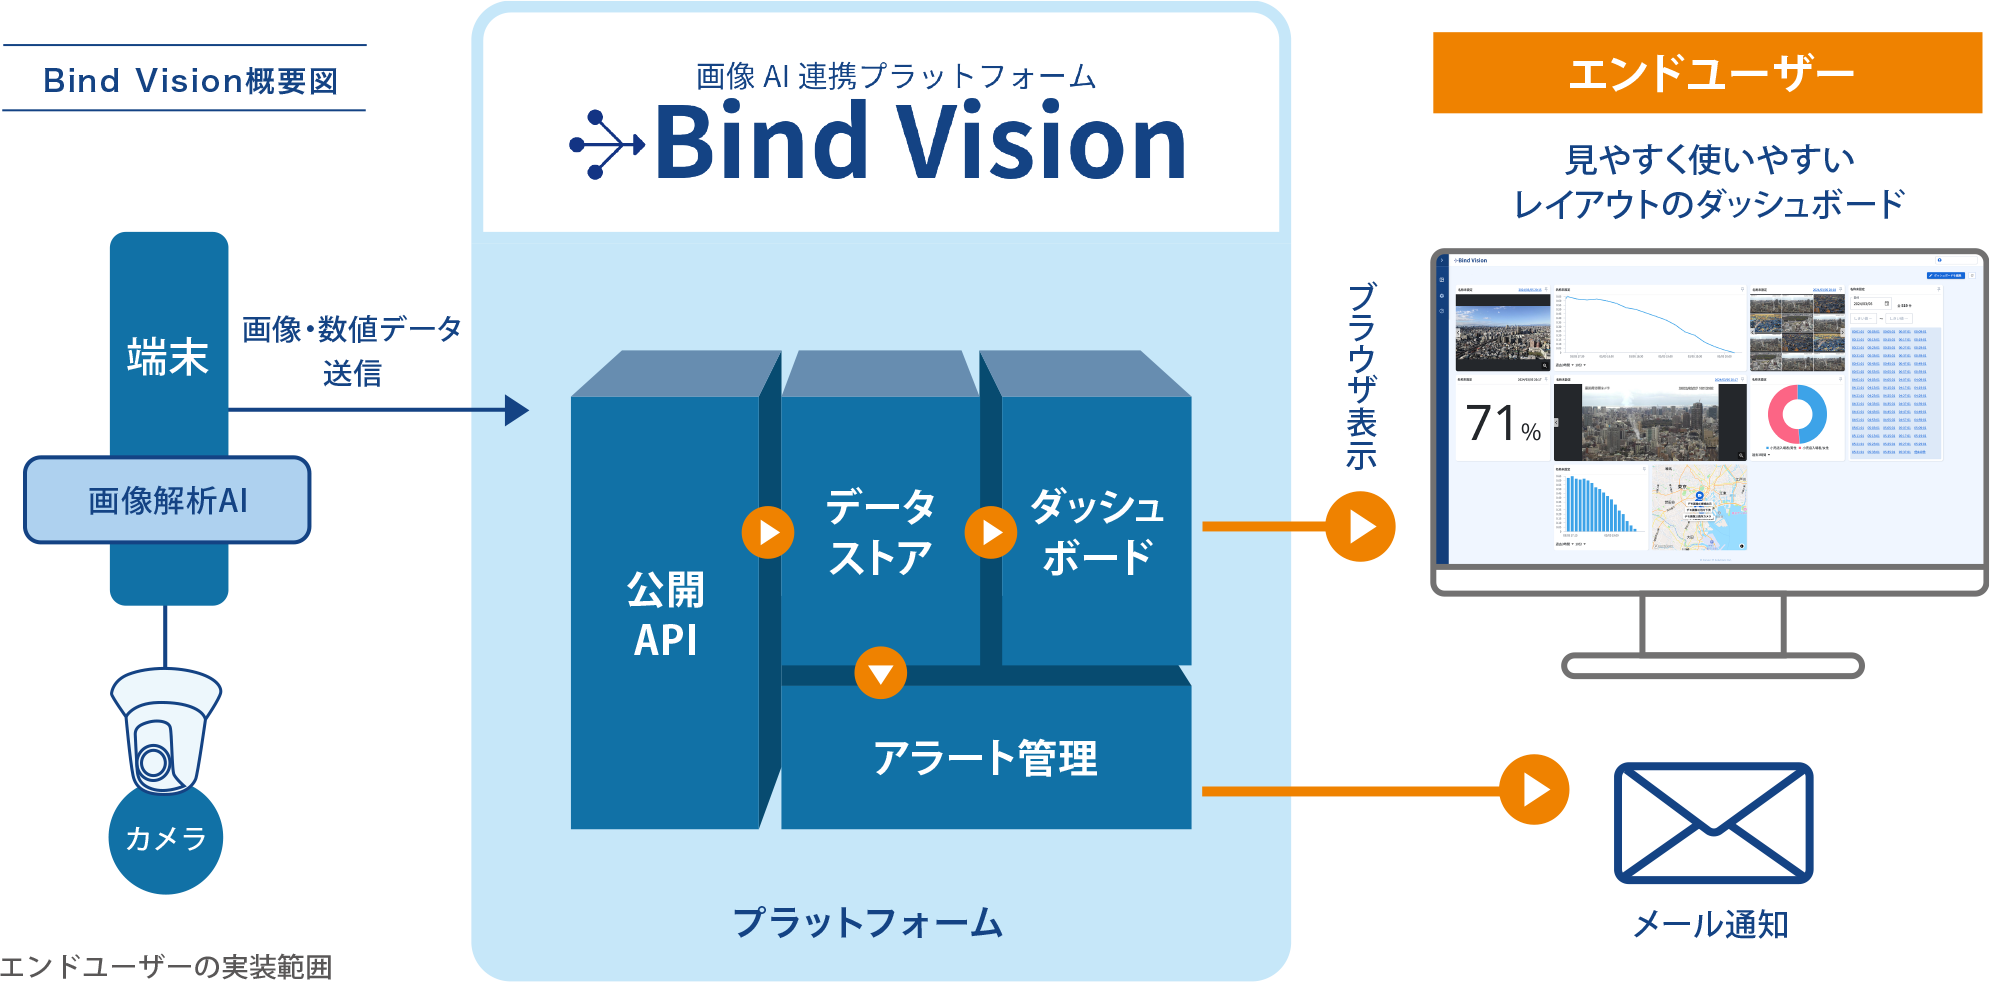 Bind Vision概要図